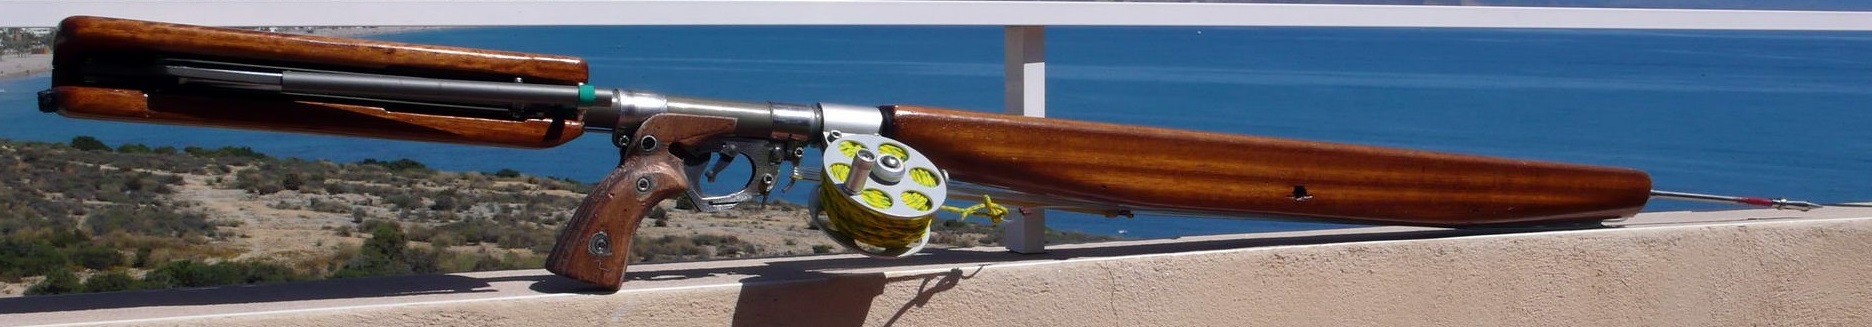 Aquatech Black Sea gun with timber buoyancy jacket.jpg